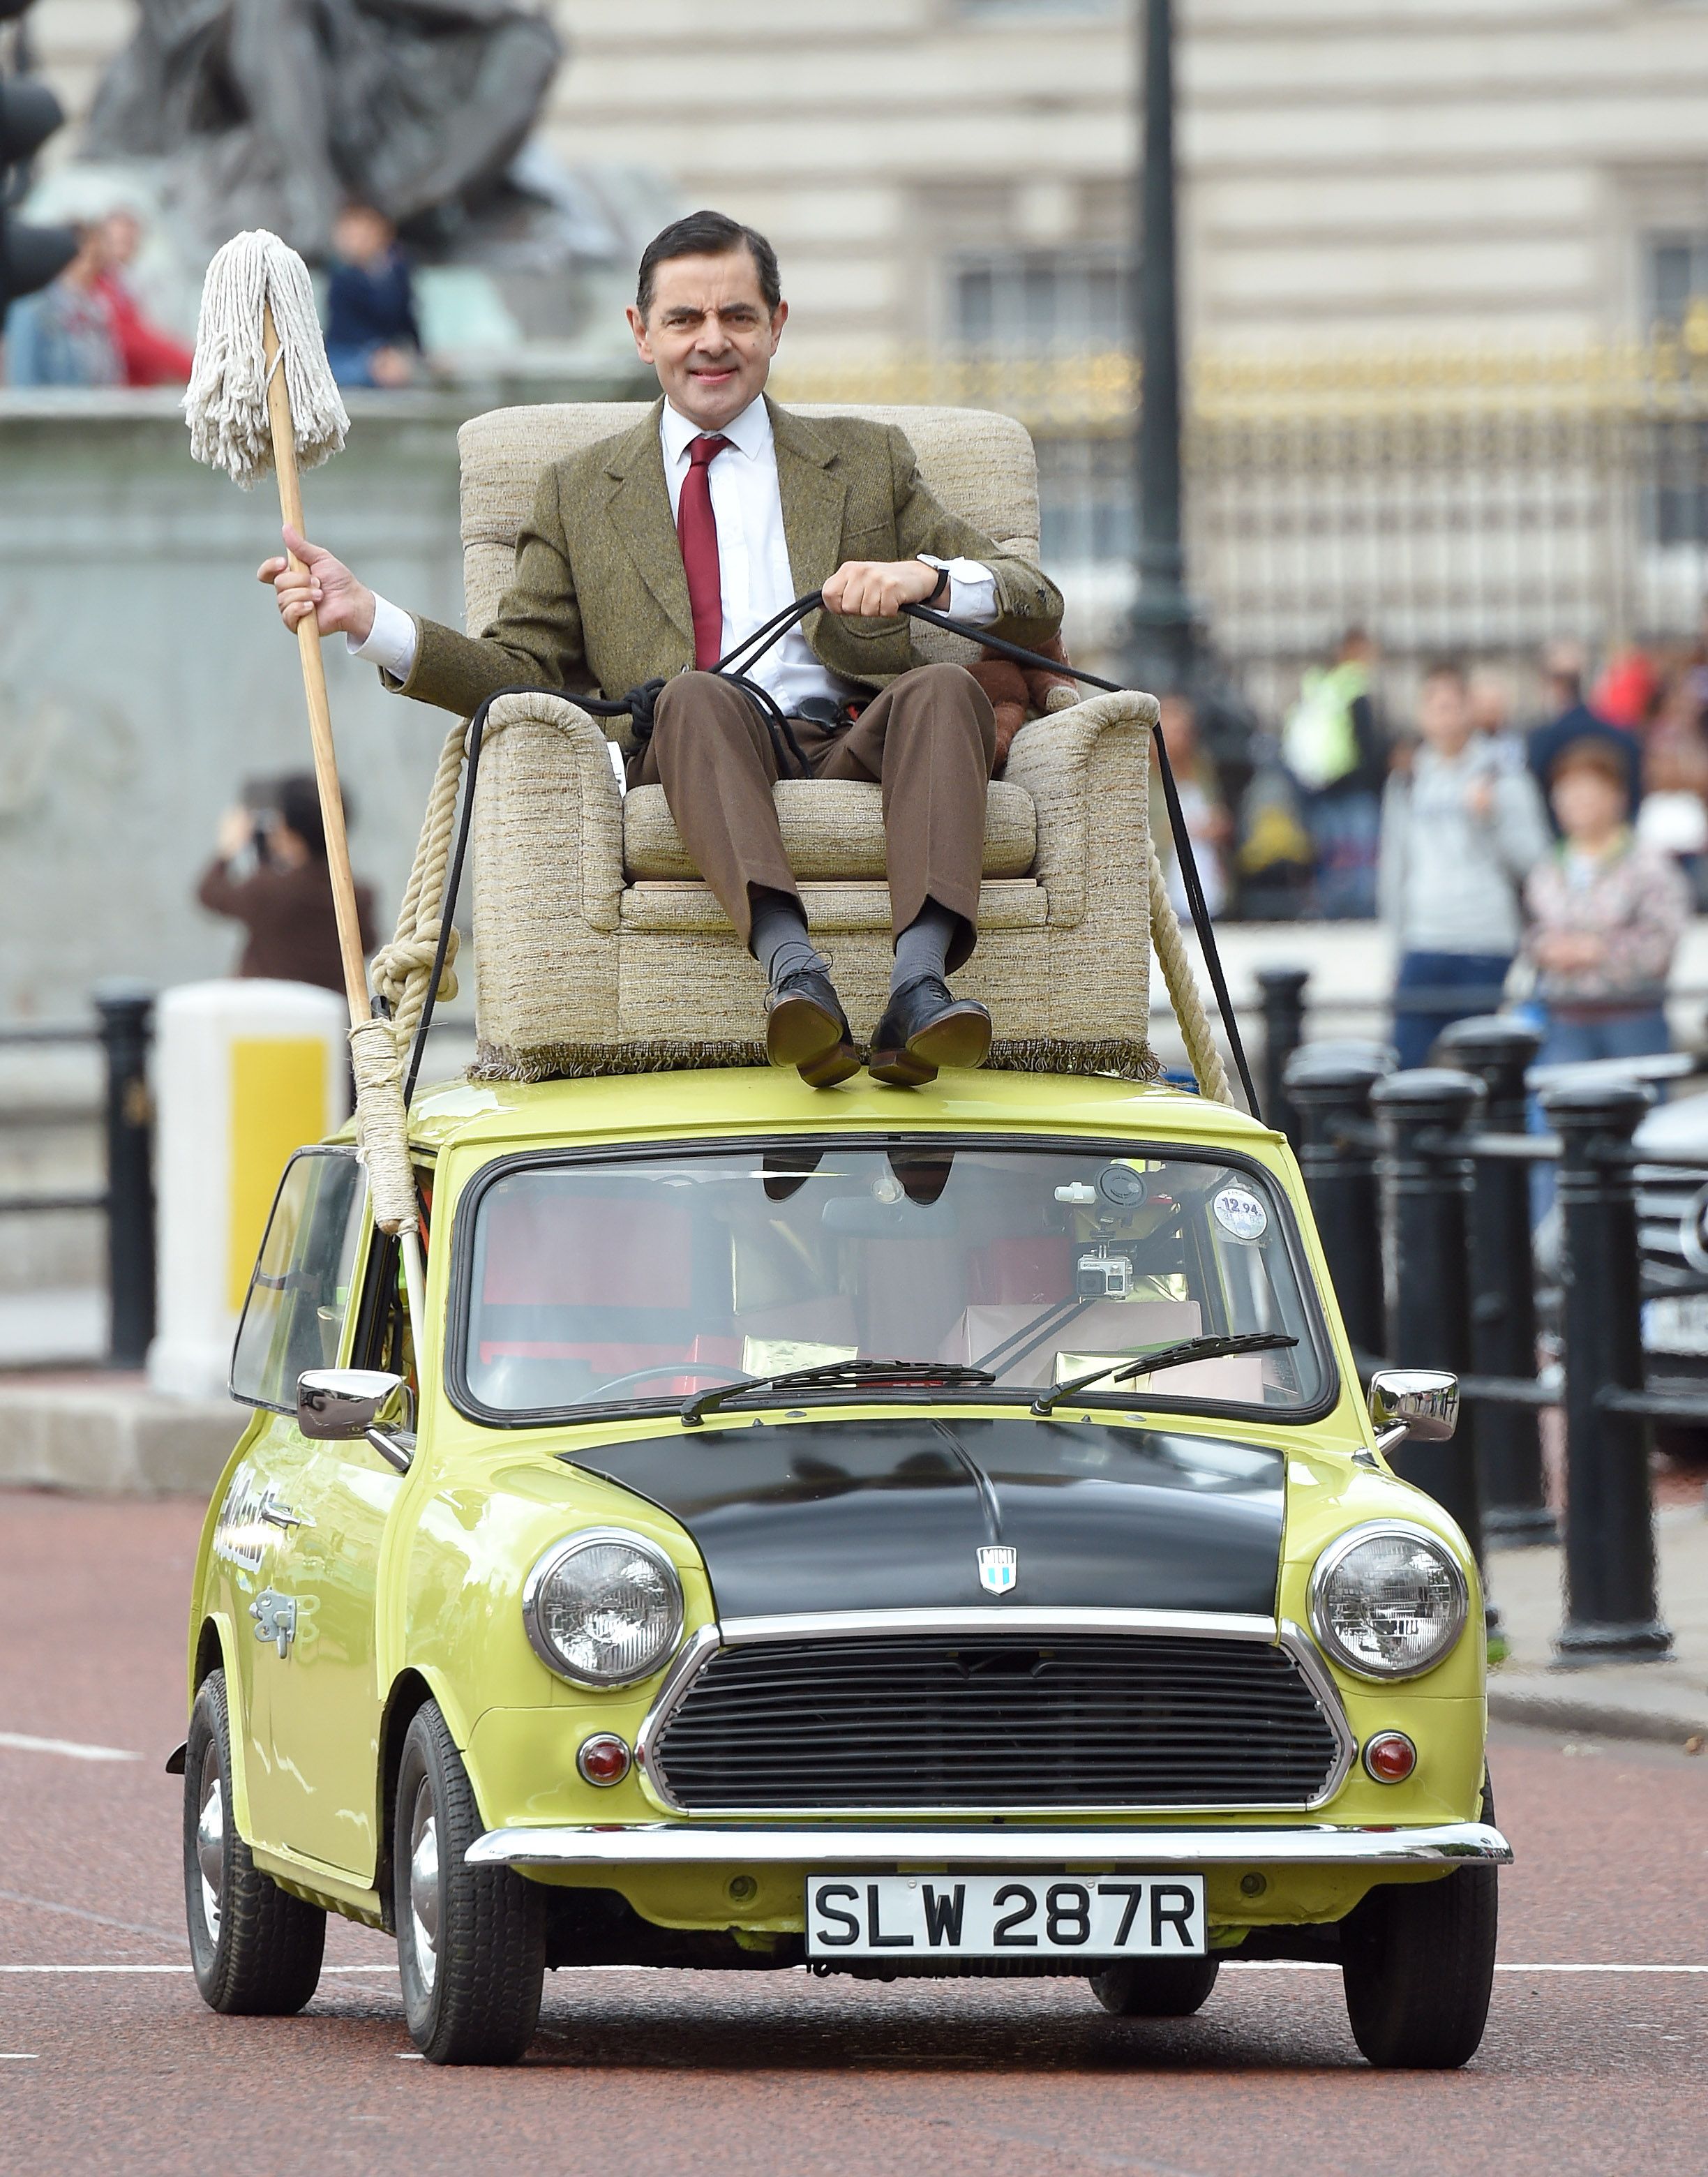 Mr Bean On Car Cake Topper - CakeCentral.com